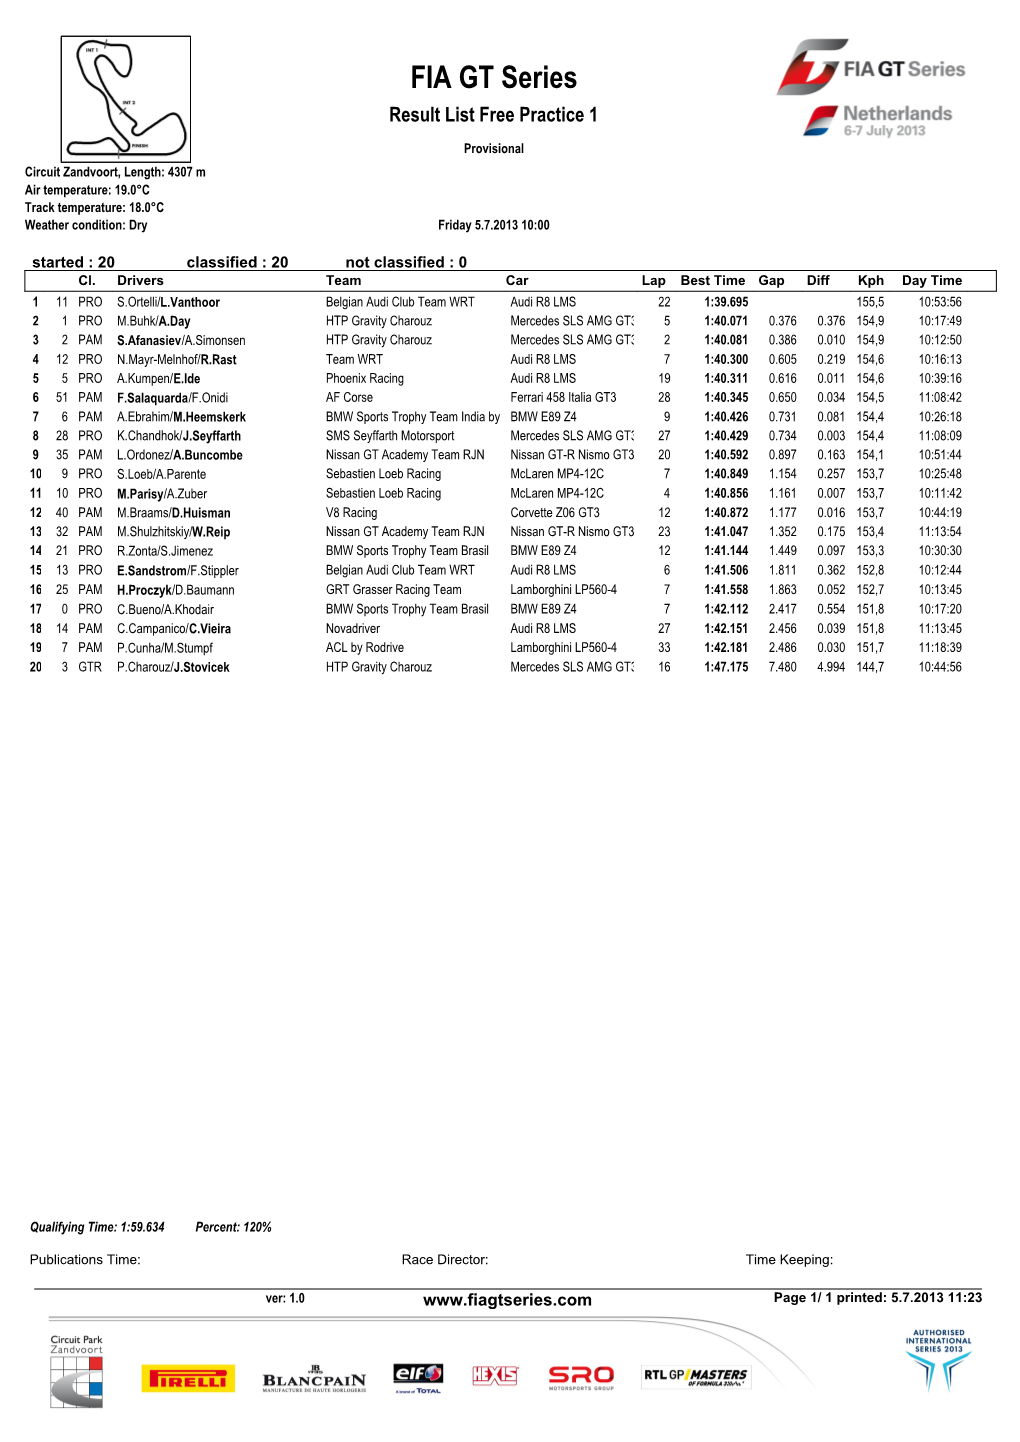 FIA GT Series Result List Free Practice 1